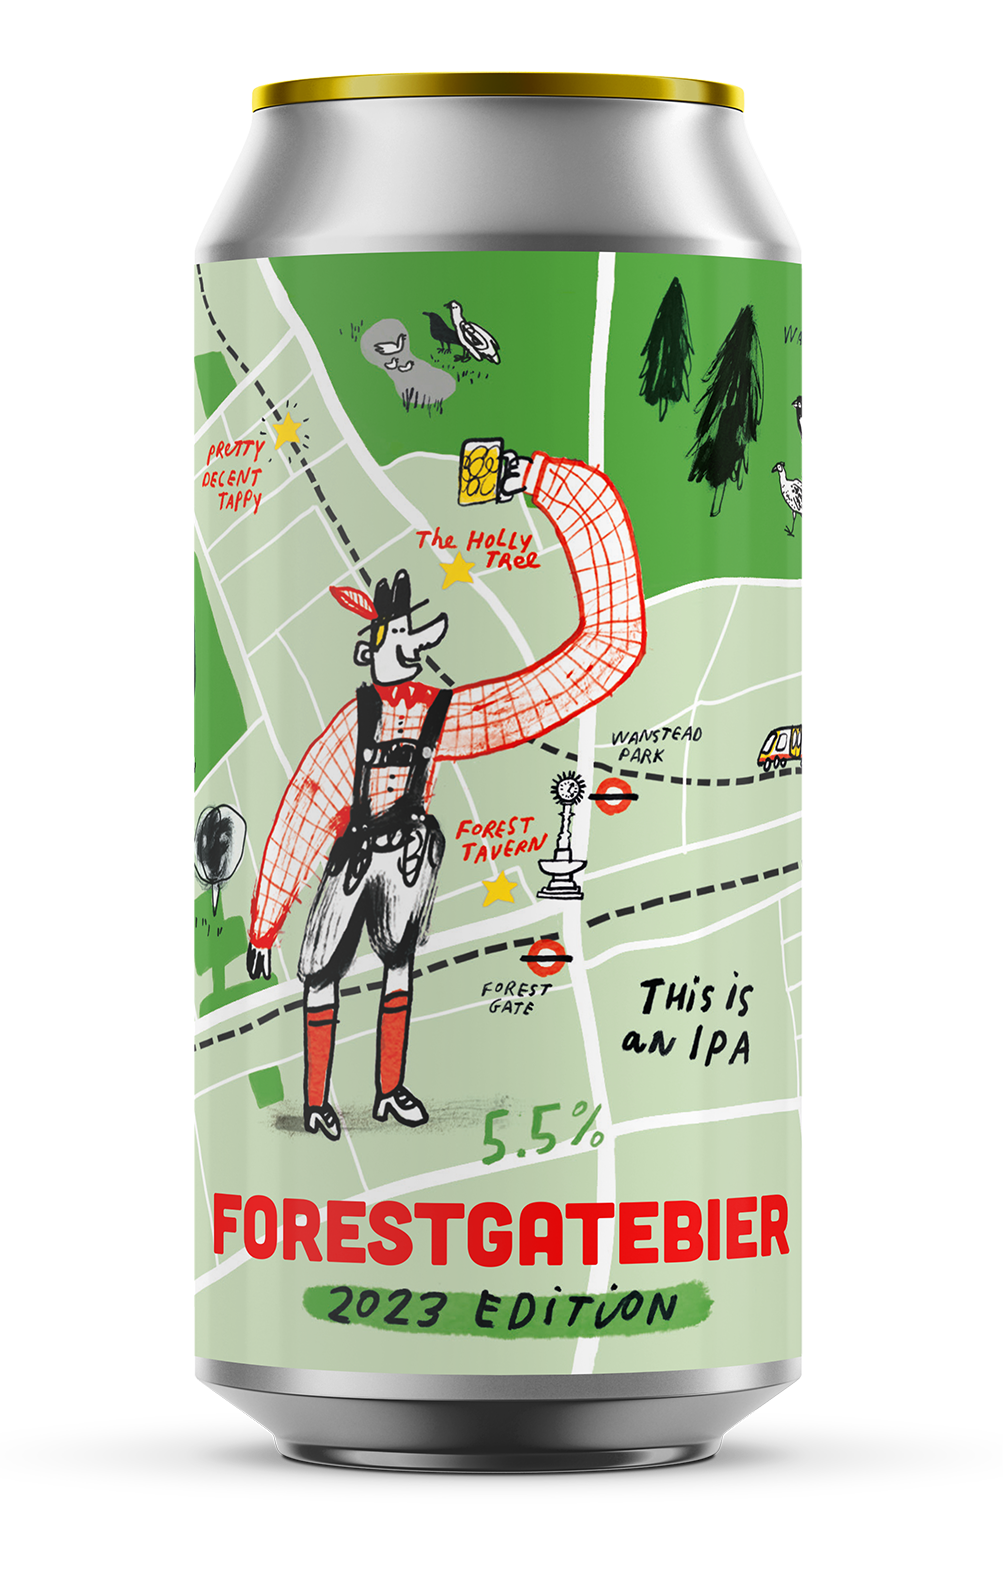 Forestgatebier 2023 Edition - IPA 5.5%